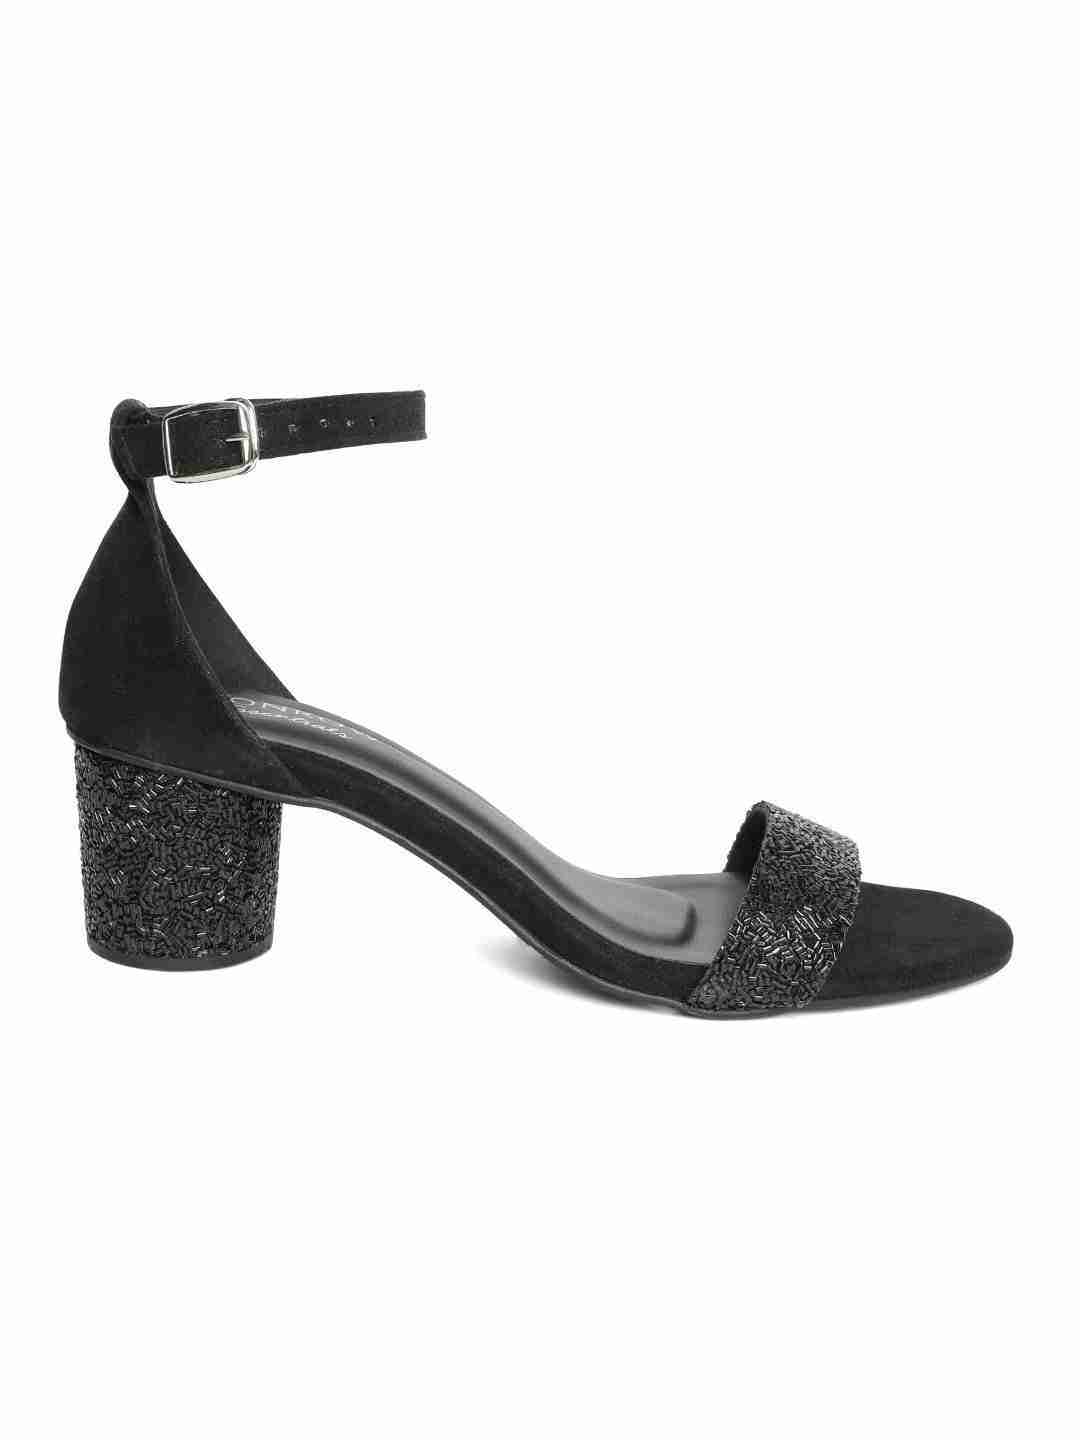 Buy Marc Loire Women's Glittery & Shimmery Block Heels Fashion Sandals ( Black, numeric_3) at Amazon.in